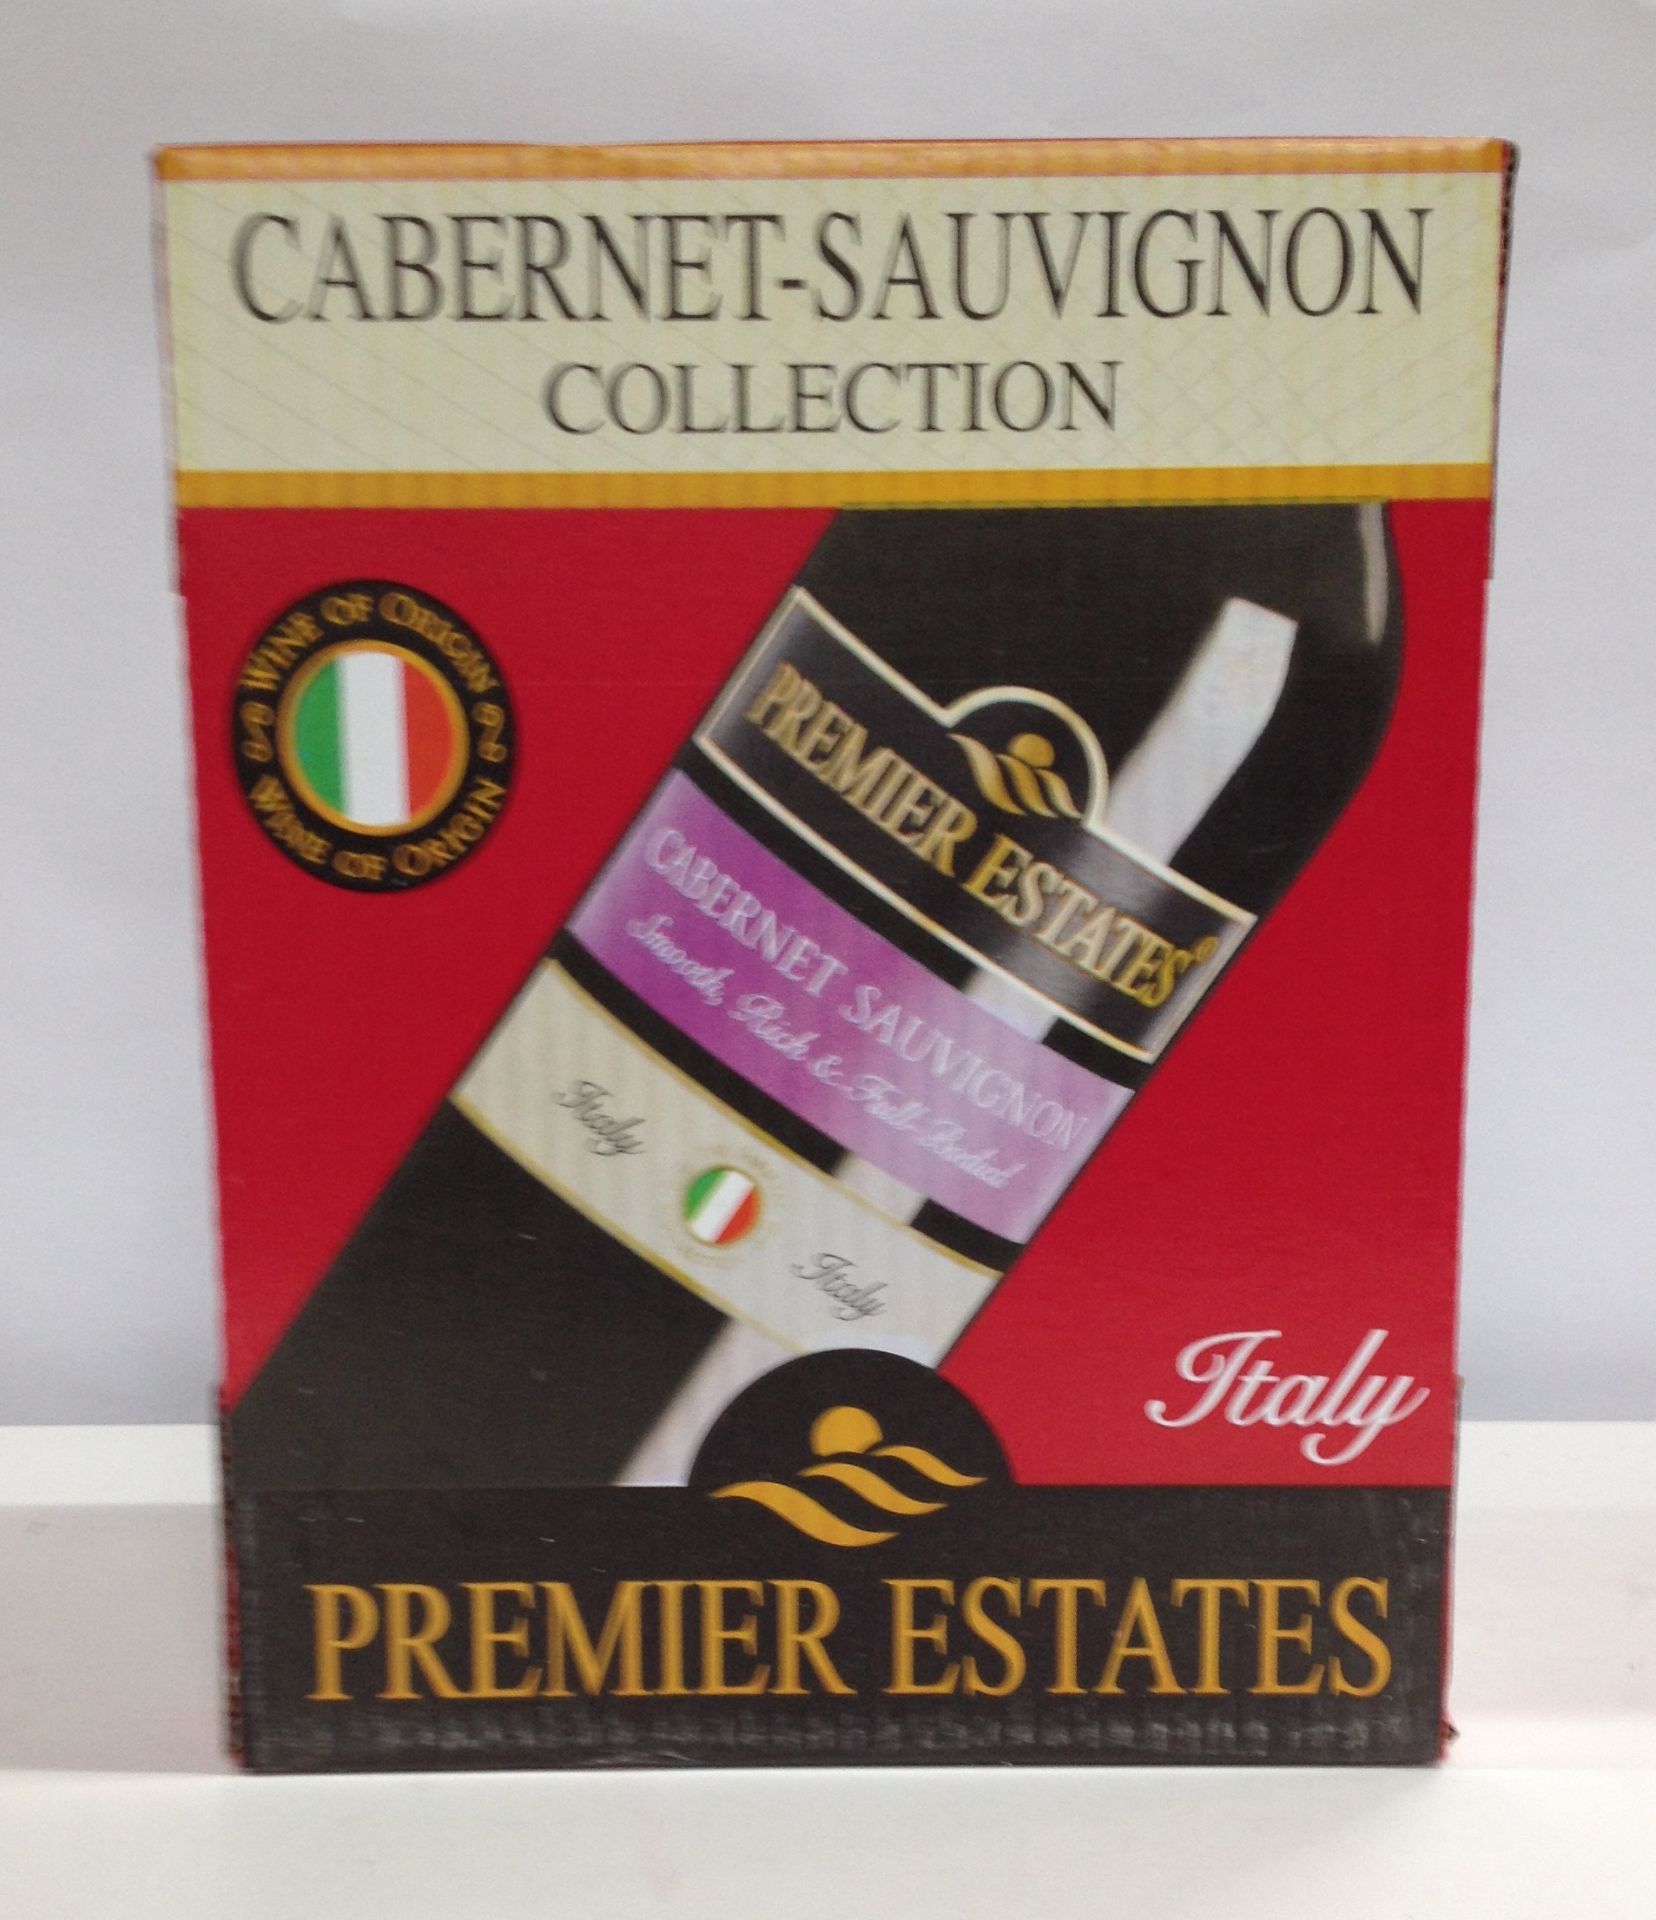 24 x 75cl Bottles Premier Estates Cabernet Sauvignon Premium Red Wine - Image 3 of 4